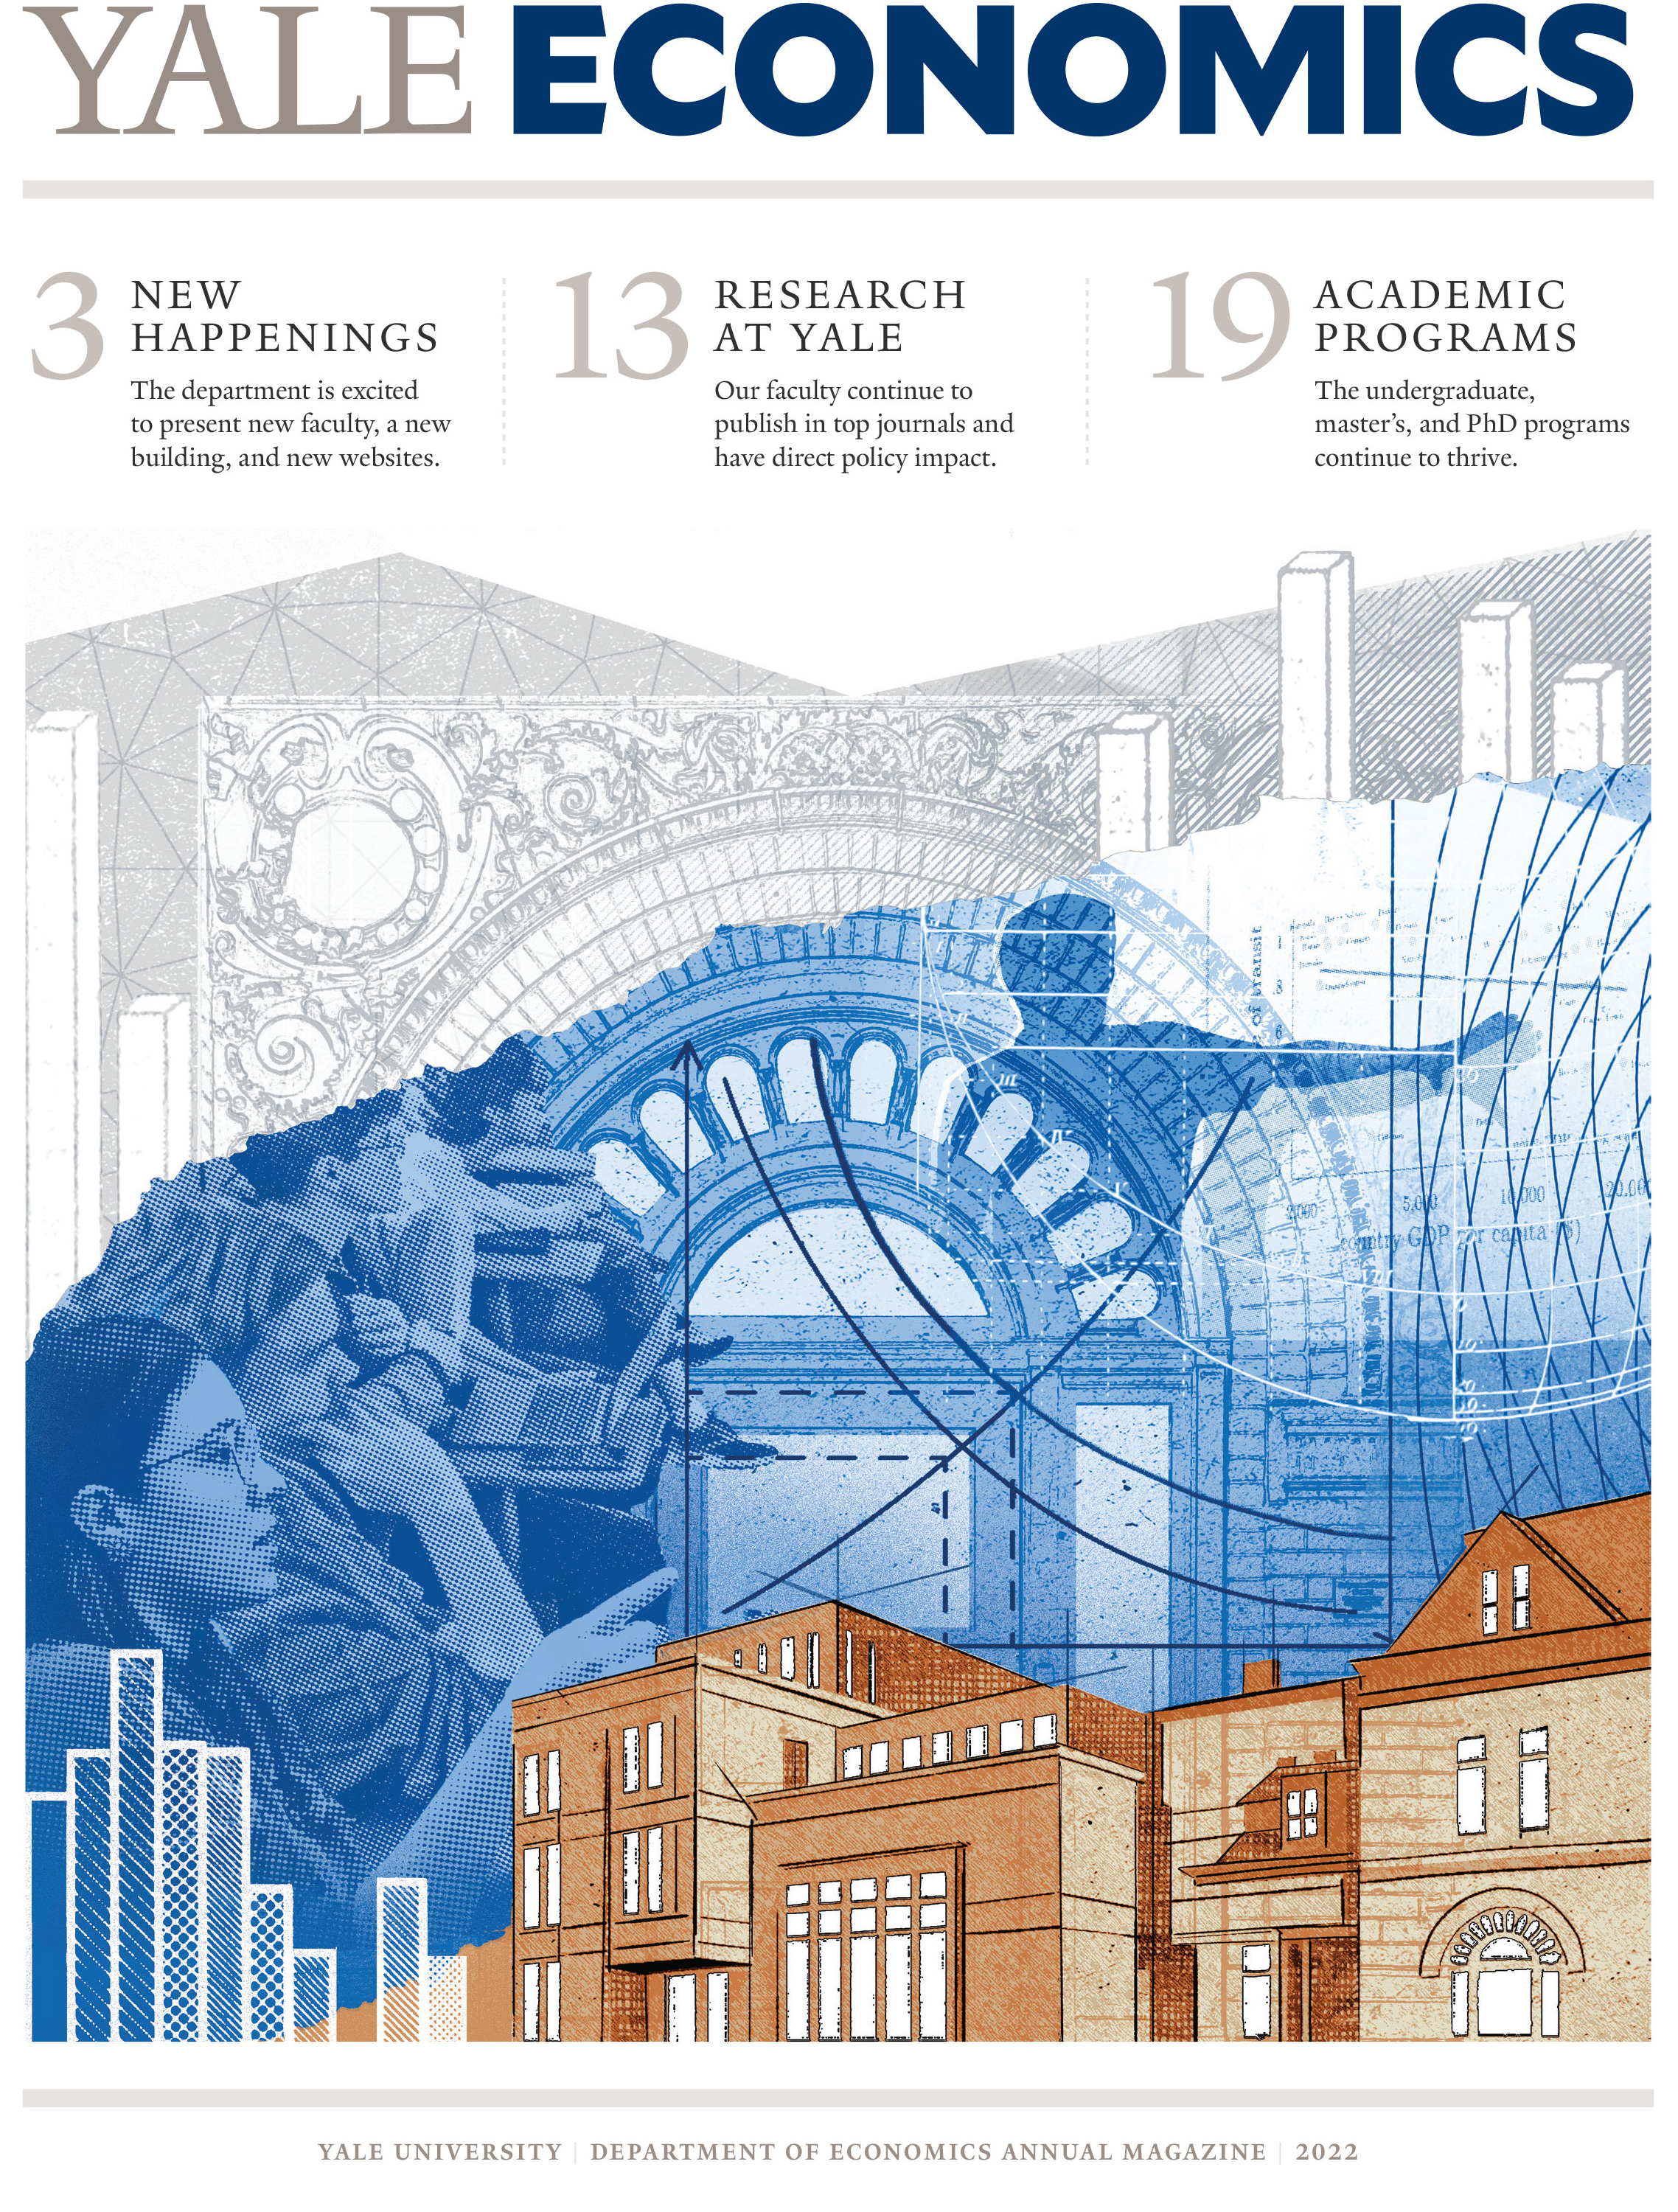 Yale Economics 2022 magazine cover